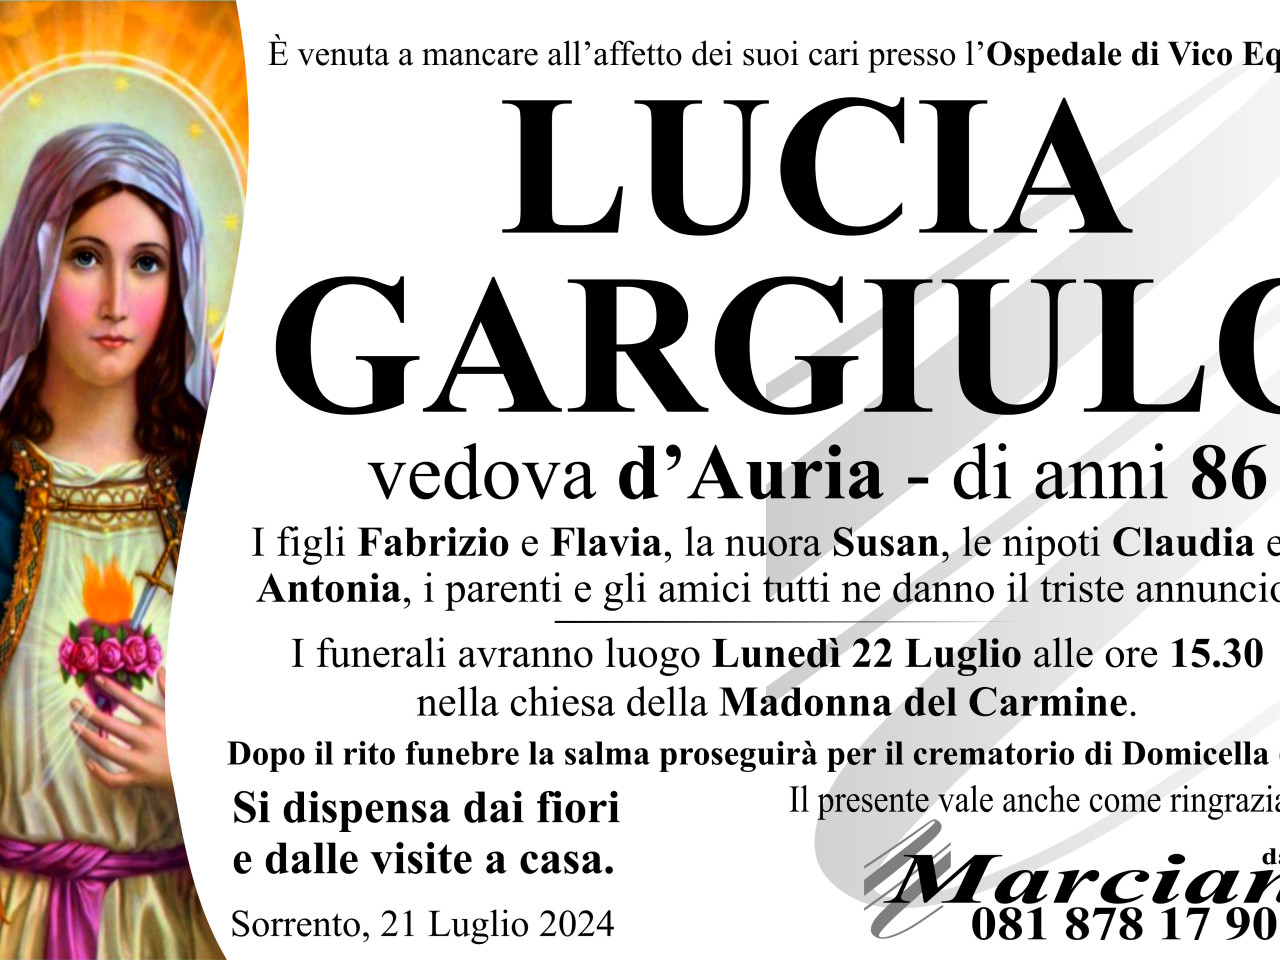 Lucia Gargiulo